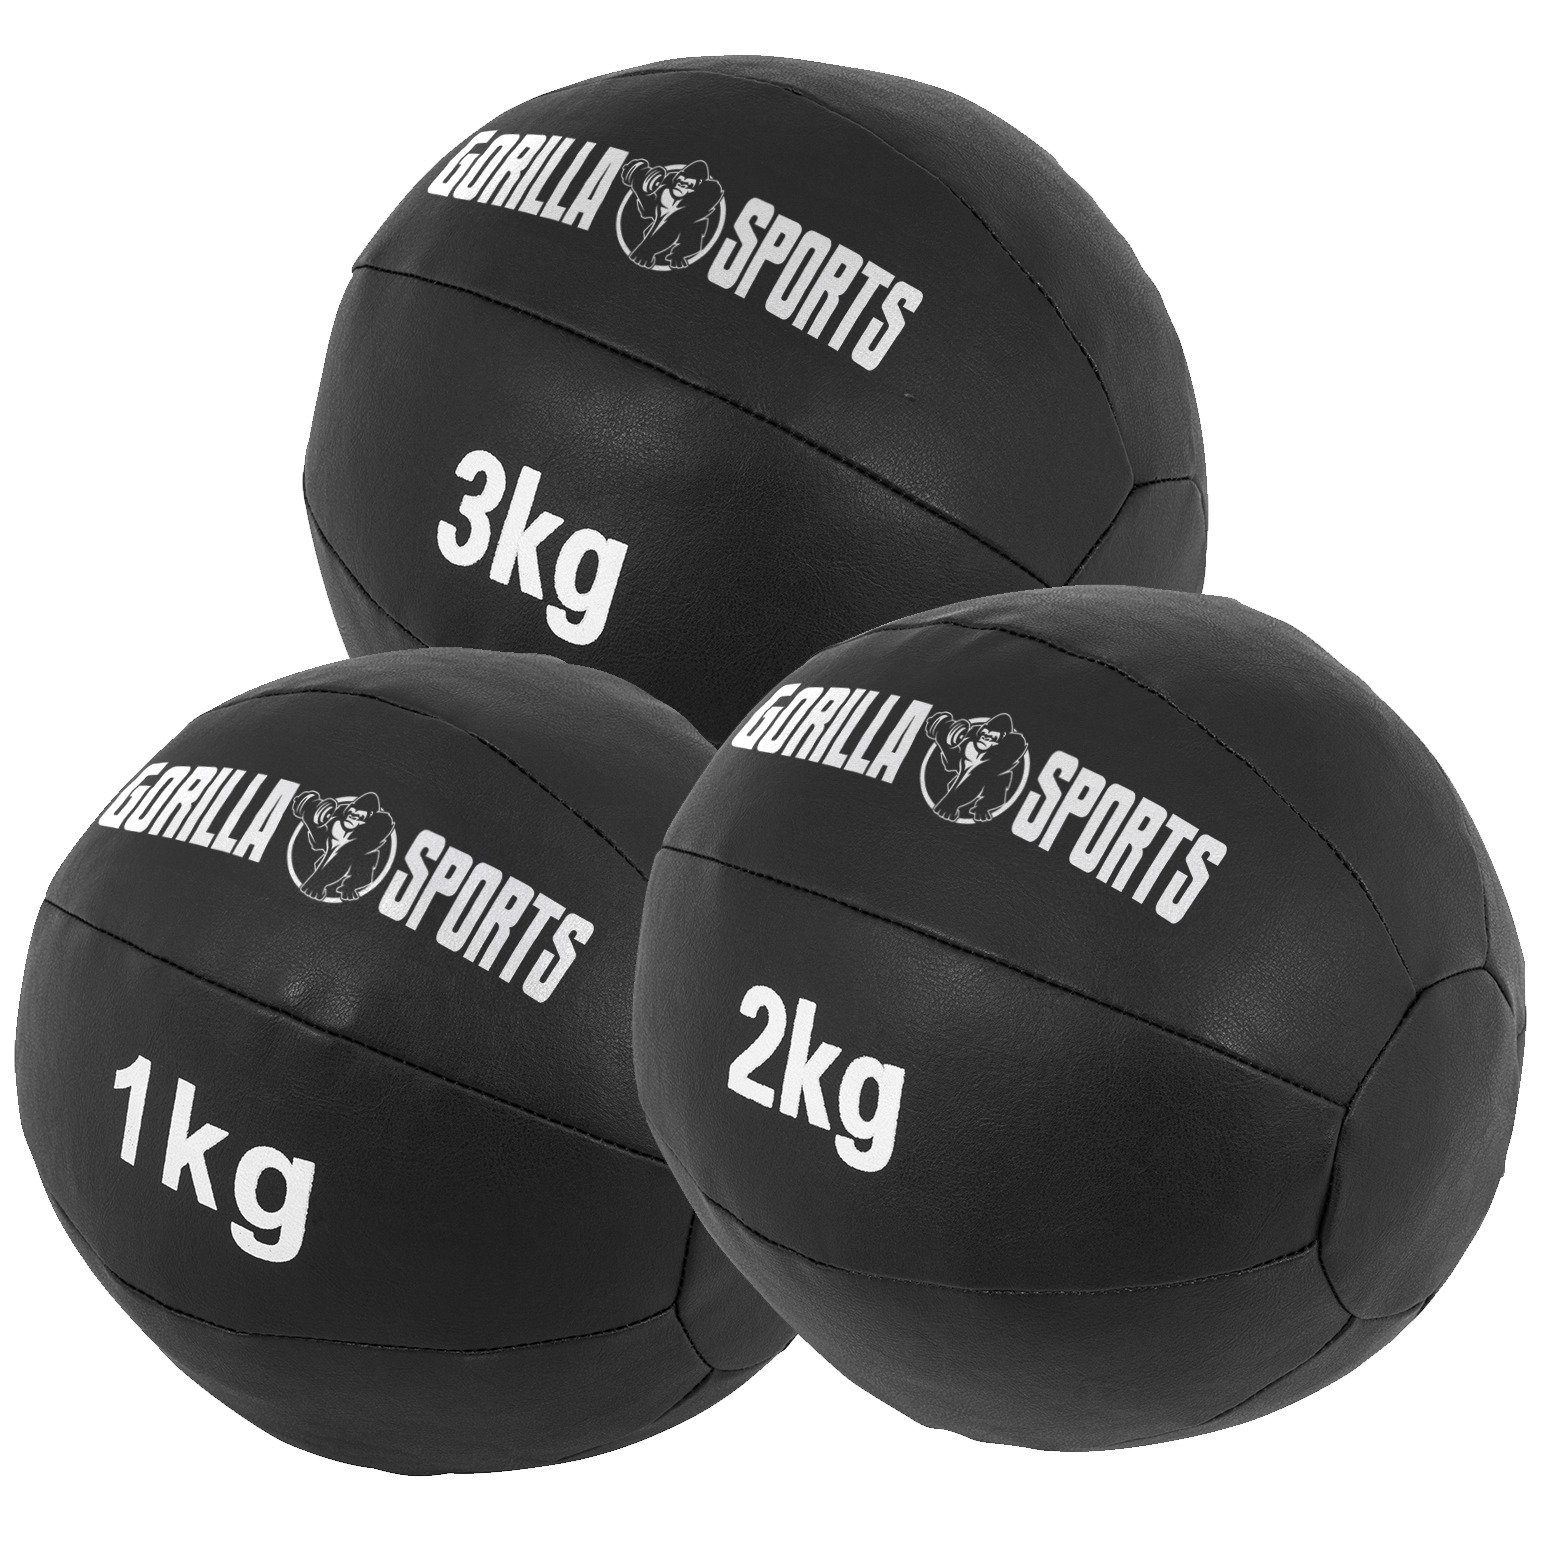 GORILLA SPORTS Medizinball Einzeln/Set, 29cm, aus Leder, Trainingsball, Fitnessball, Gewichtsball Set 6 kg